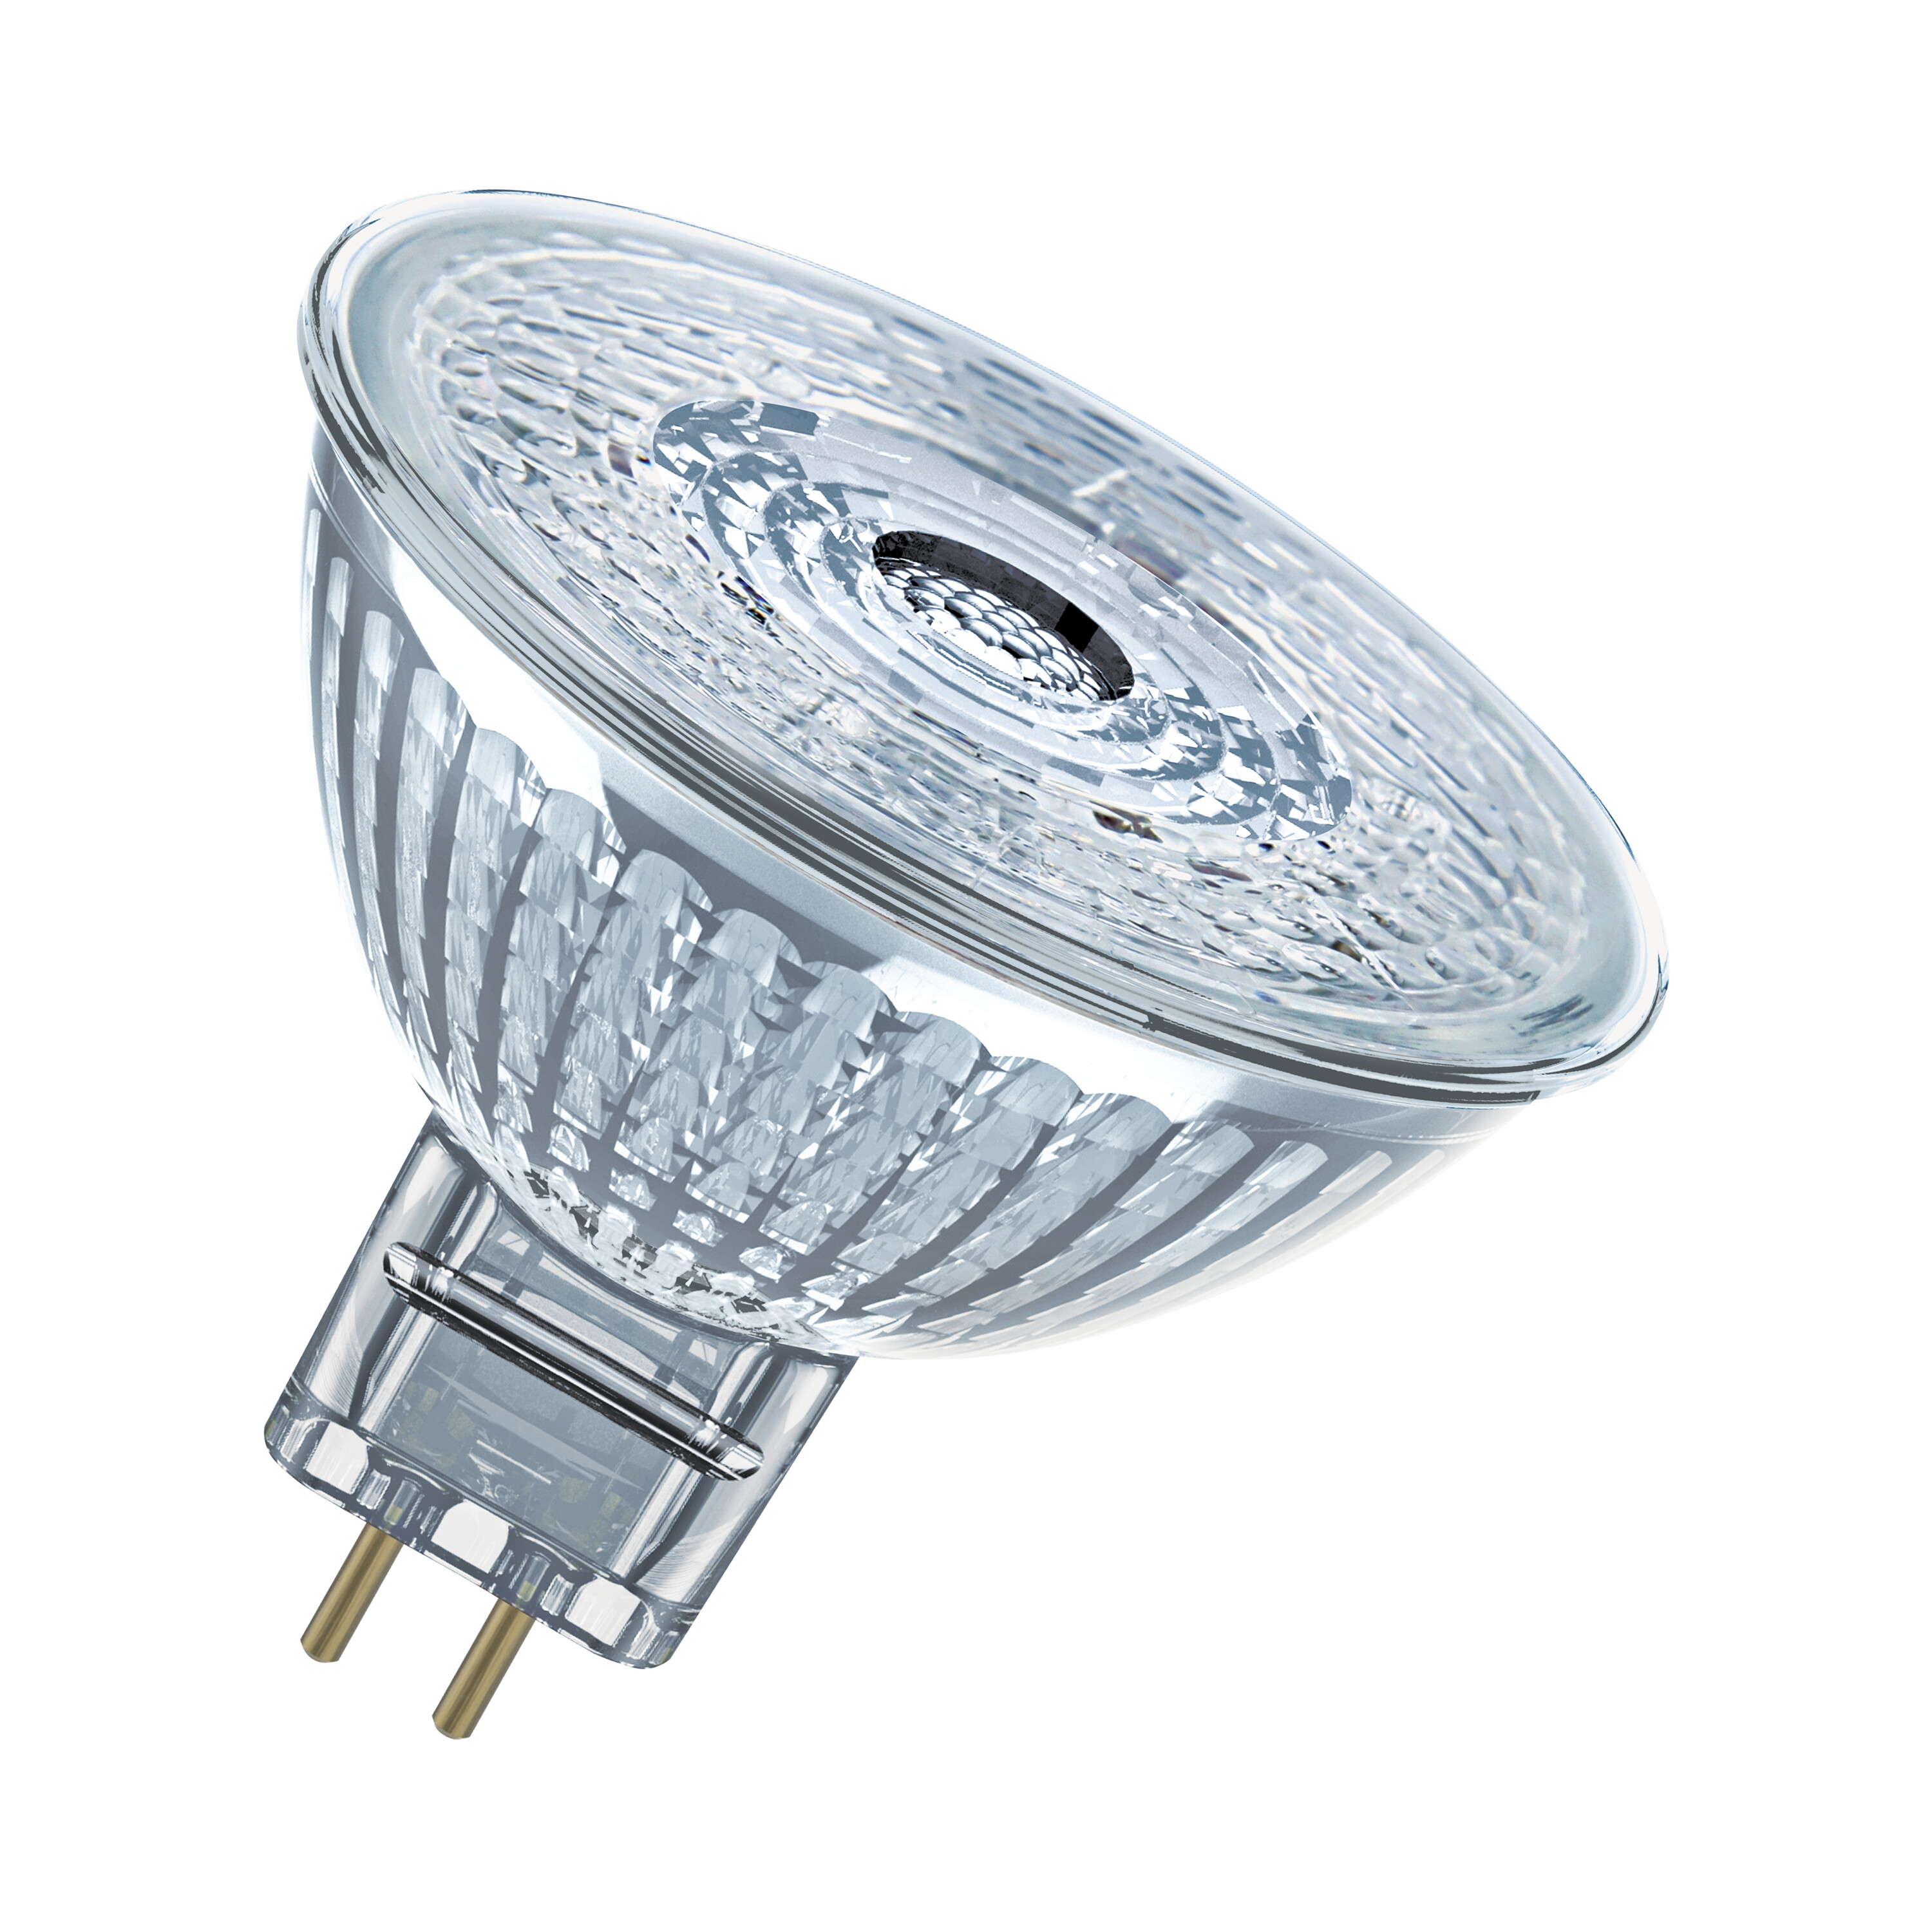 MR16 Warmweiß LED-Refektorlampe LED STAR OSRAM 